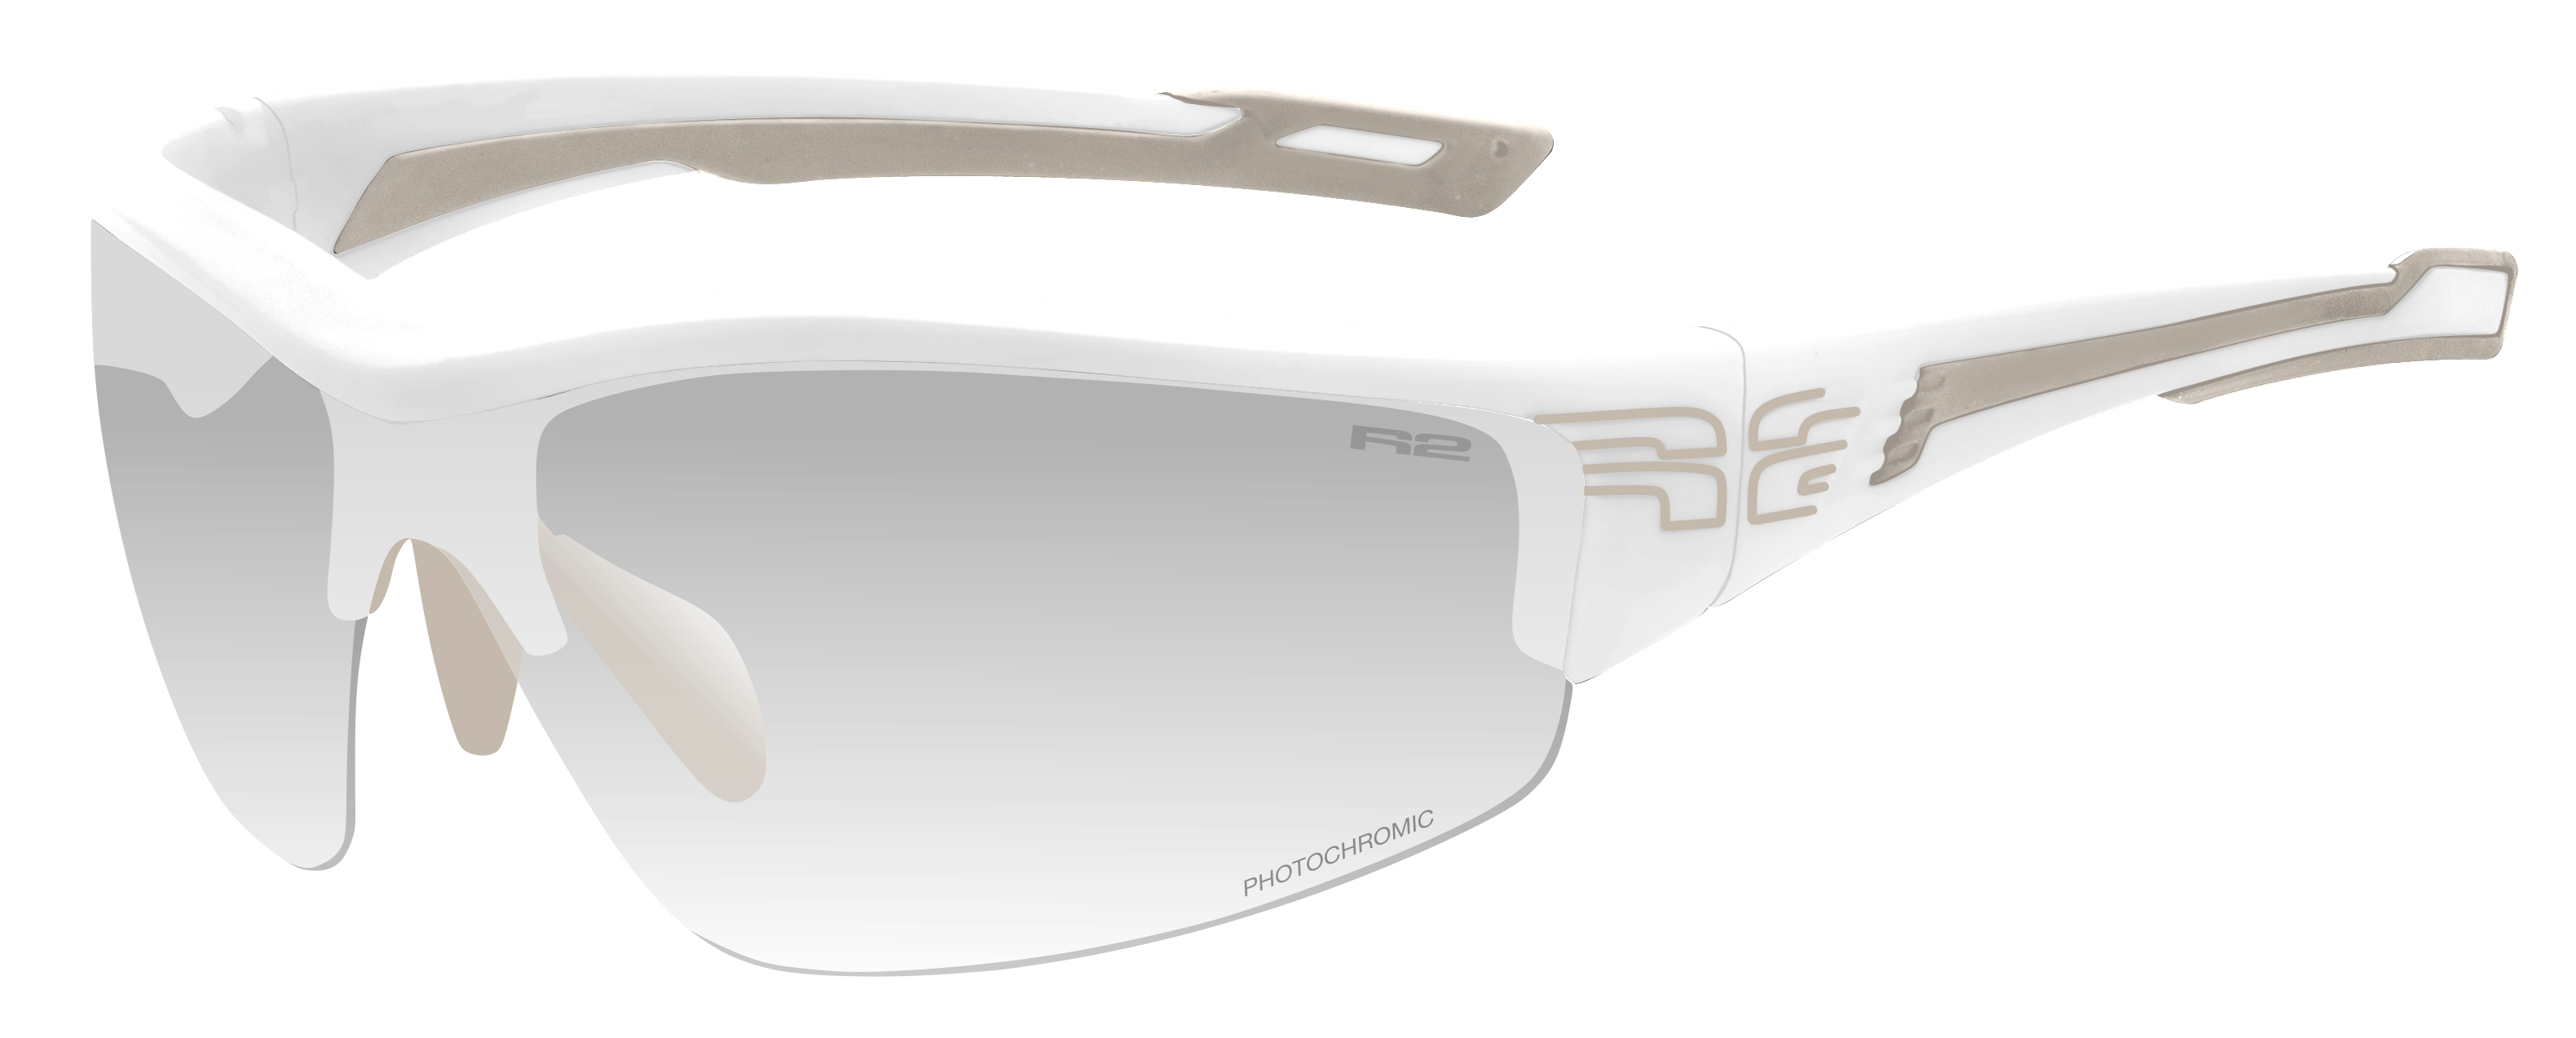 Photochromatic sunglasses R2 WHEELLER AT038S standard